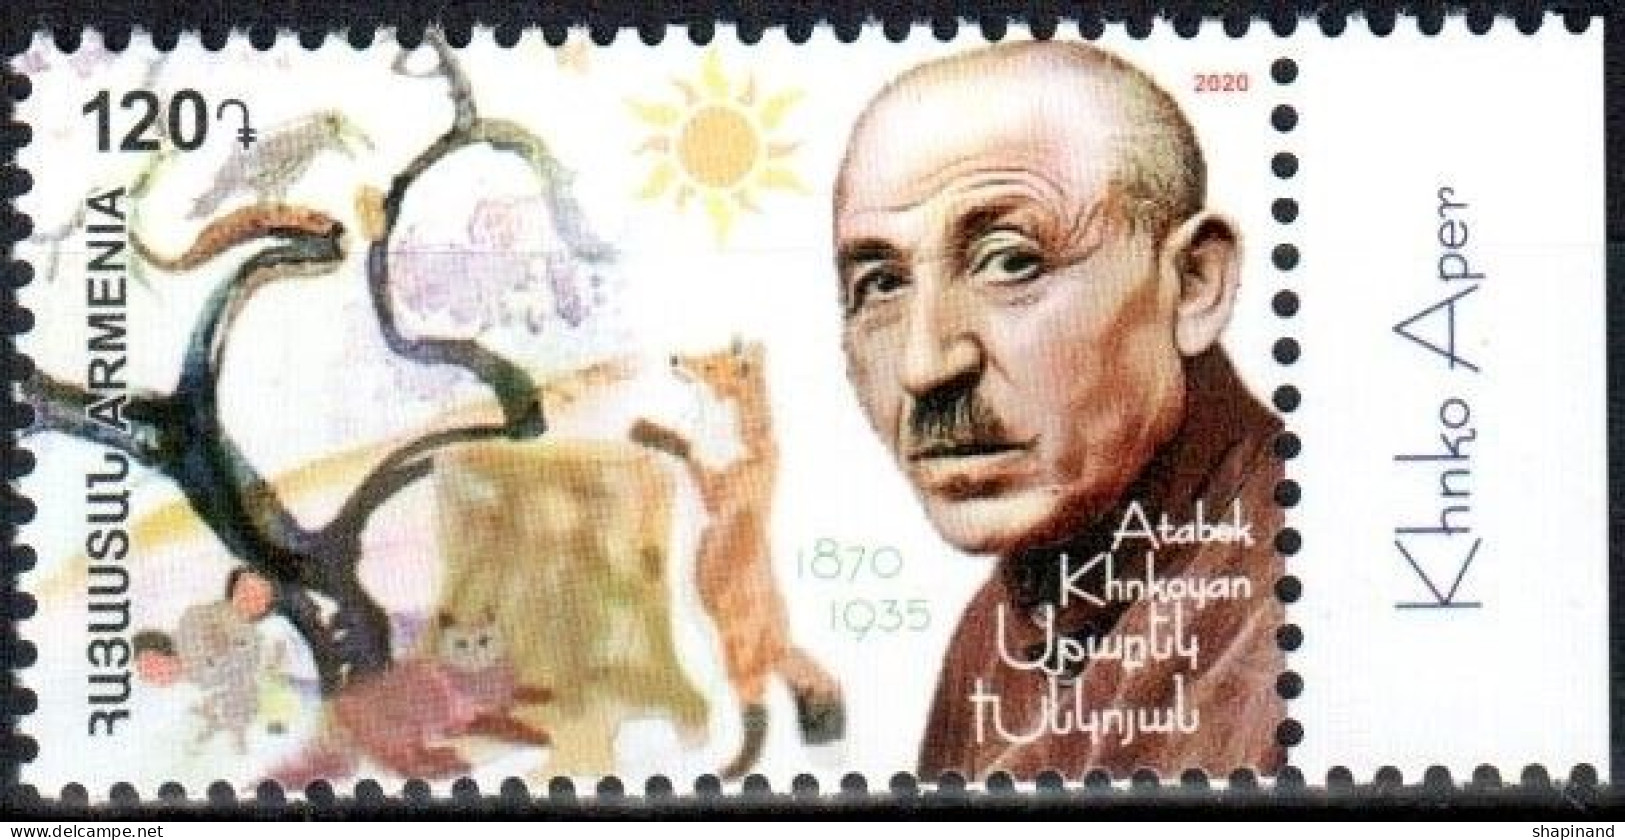 Armenia 2020 The Prominent Armenian Children’s Writer Atabek Khnkoyan (Khnko Aper, 1870-1935) 1v Quality:100% - Armenien